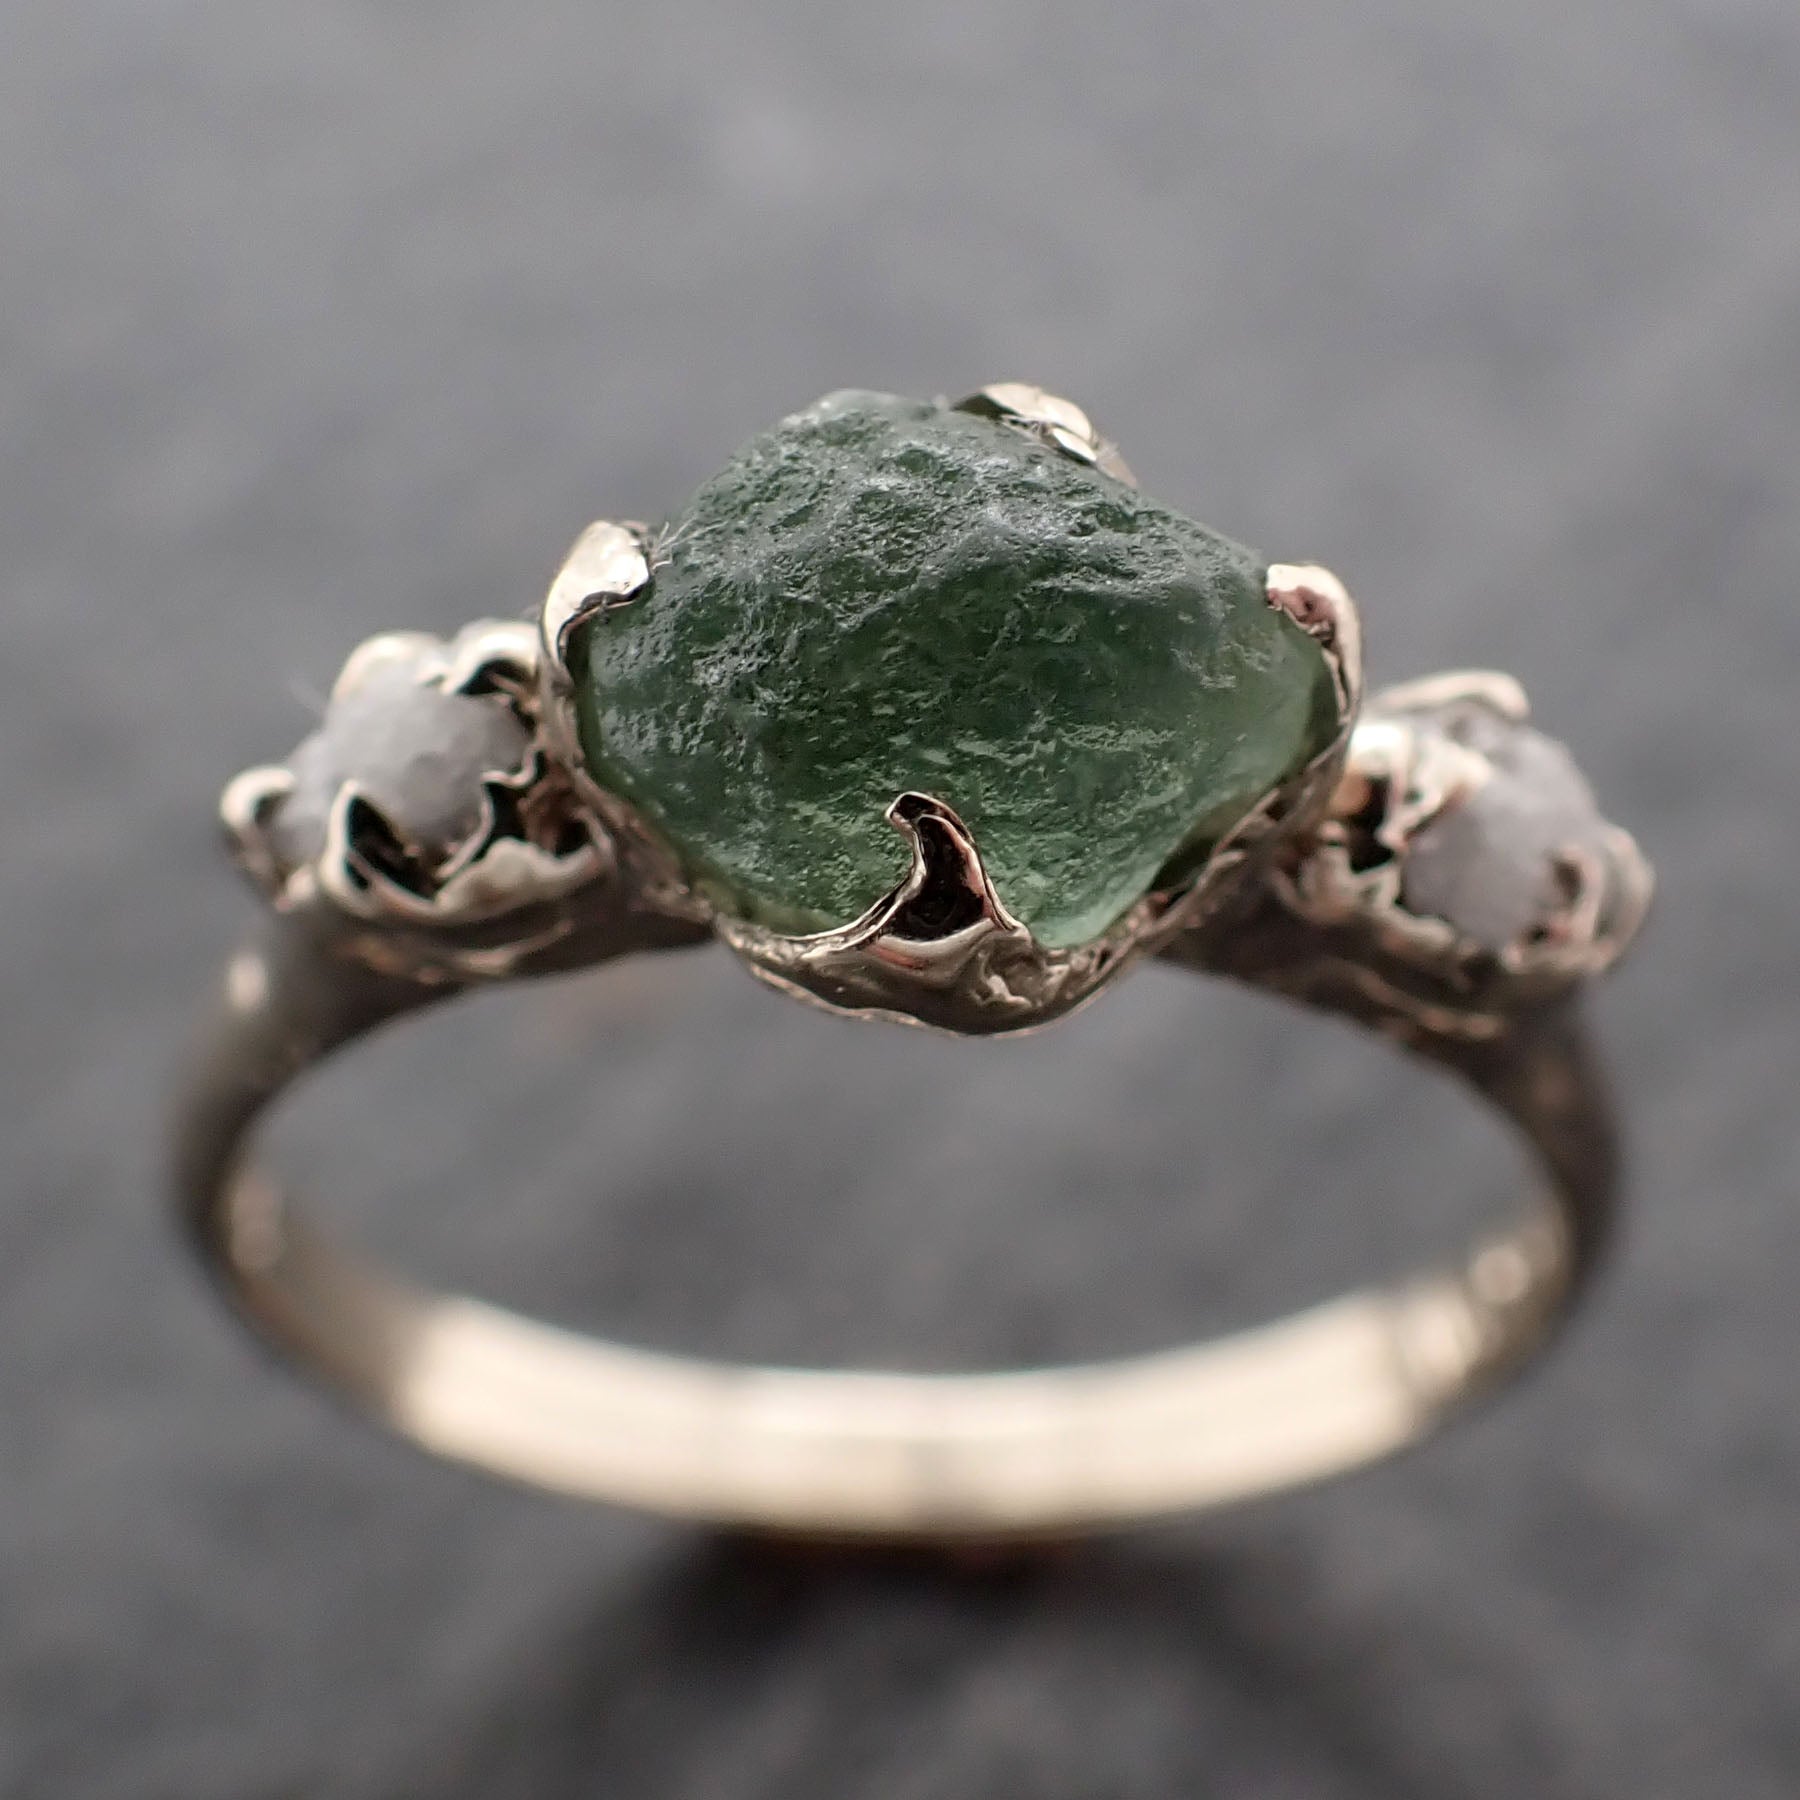 Very Pretty Green Sapphire and Diamond Ring - Larc Jewelers